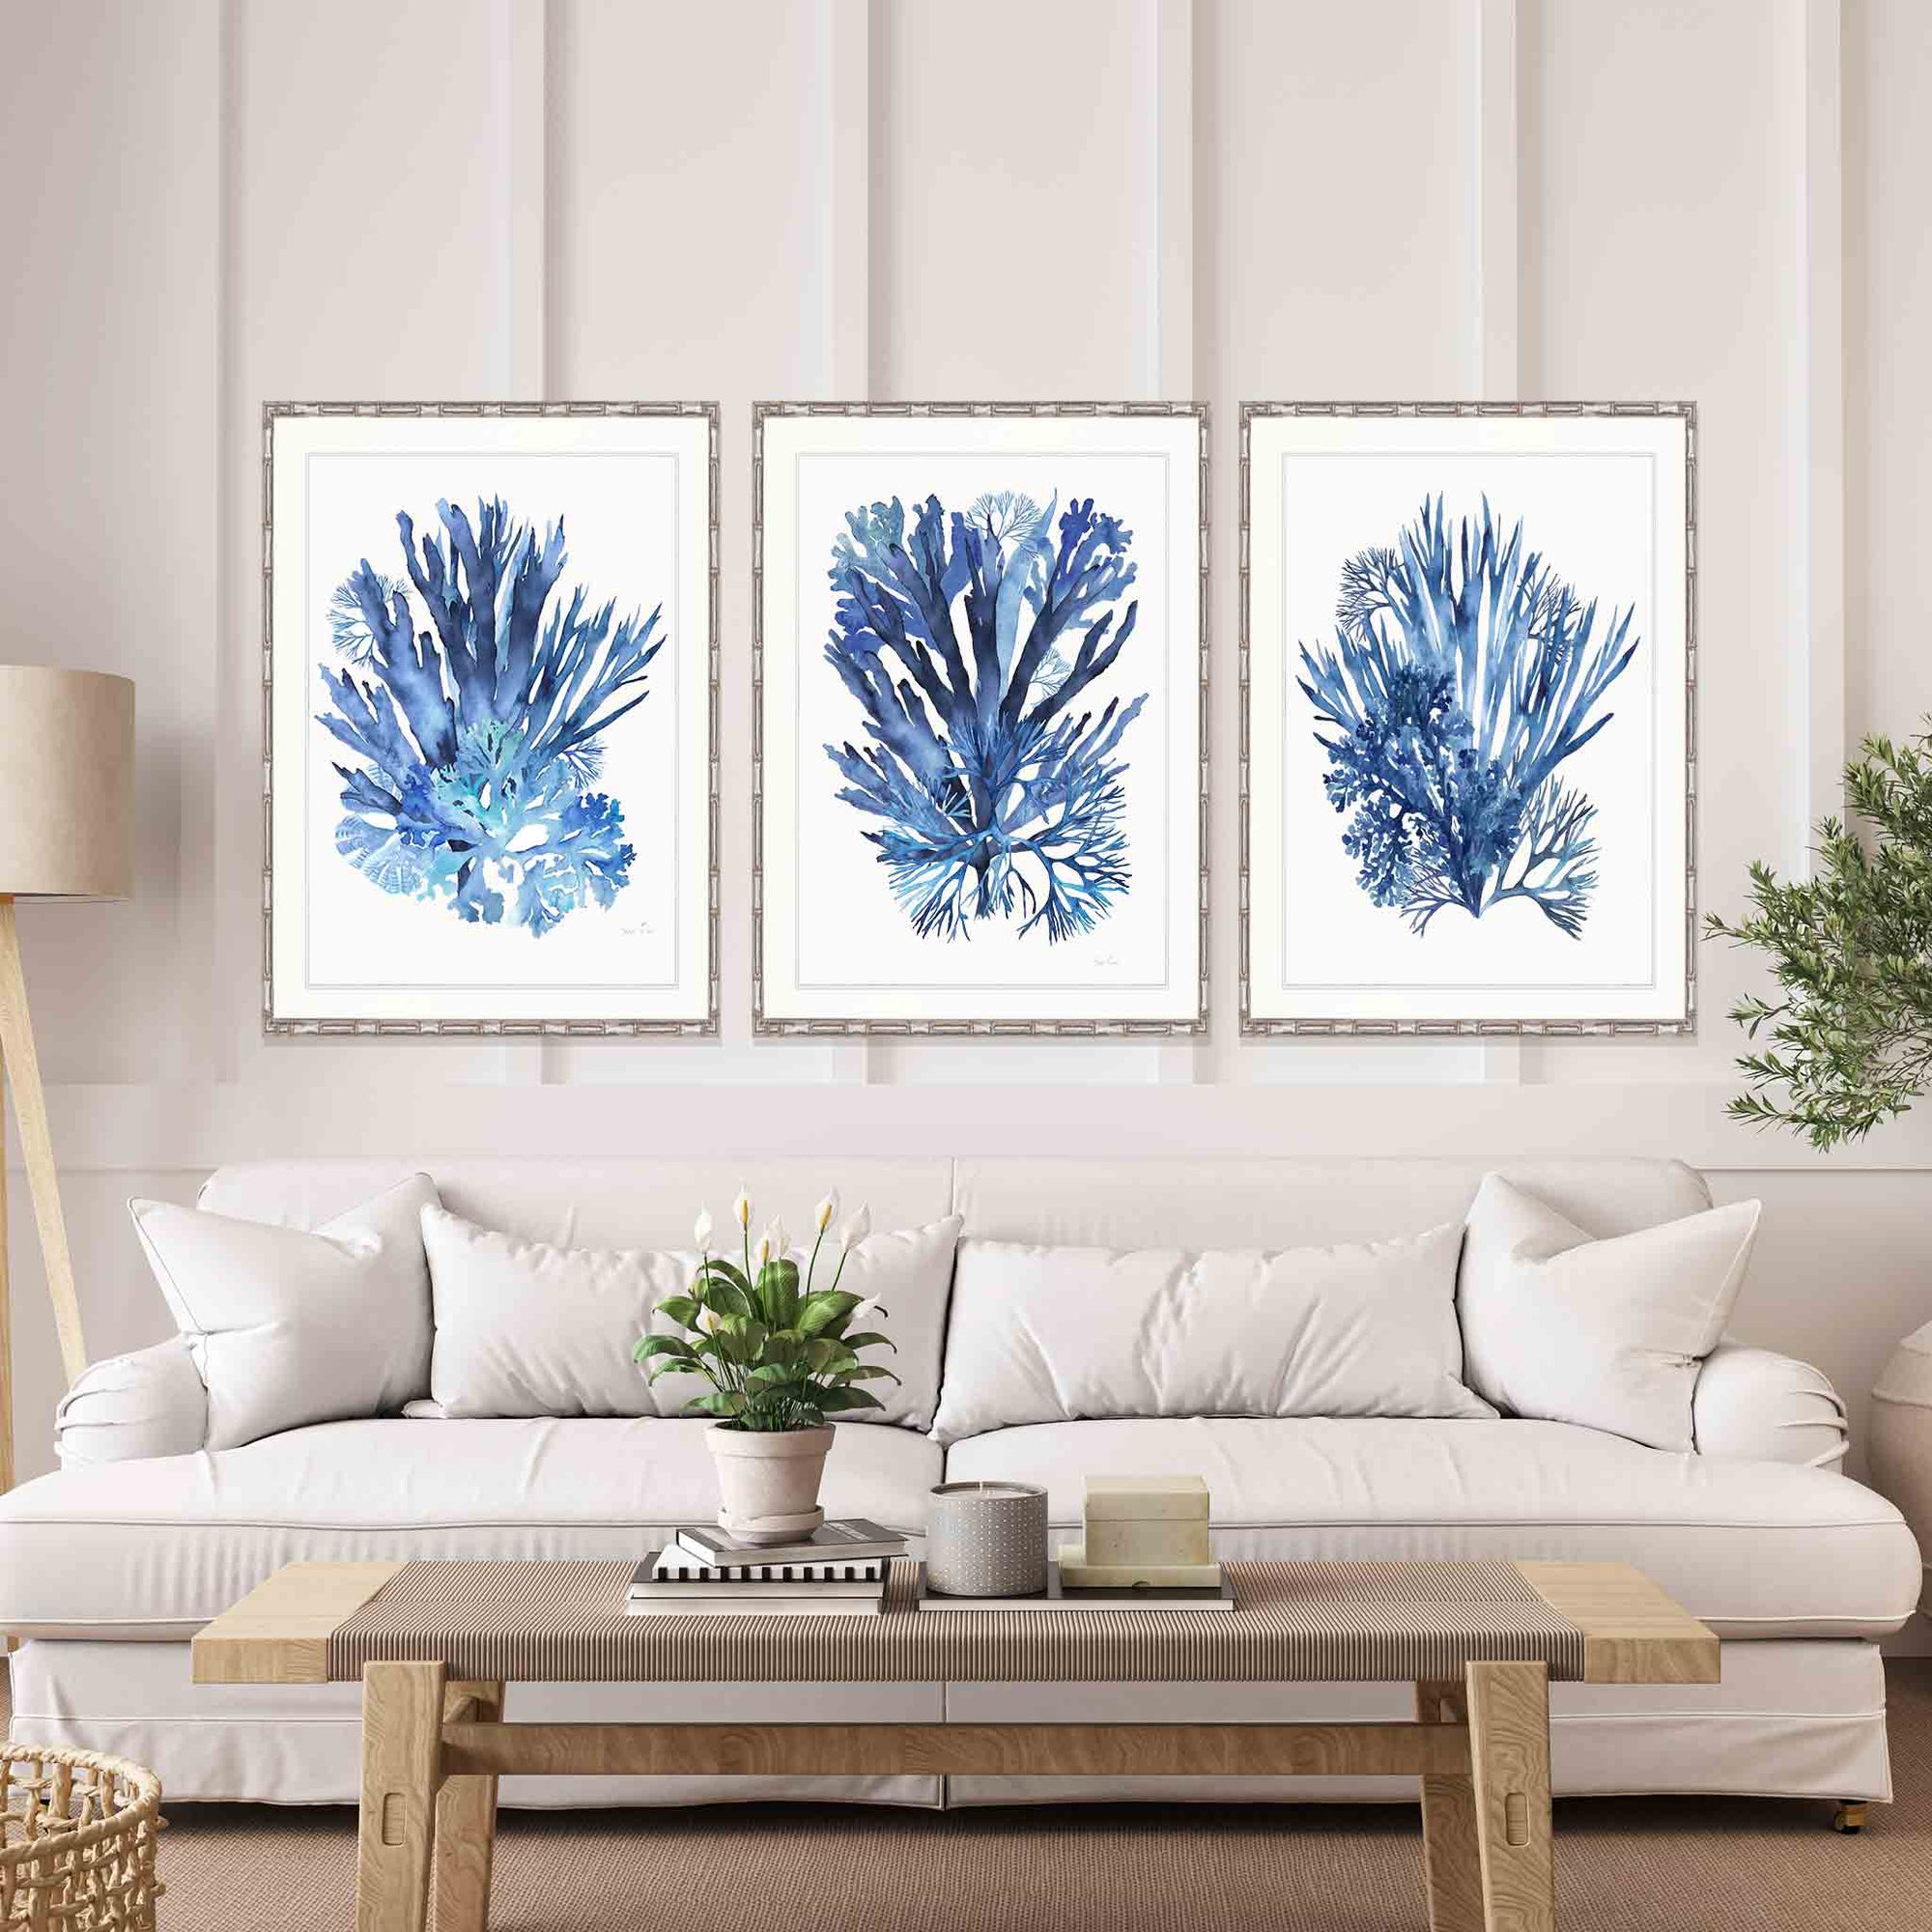 Set of 3 Wall Art Prints - 3 Piece Set of Blue Coral Seaweed Prints - Driftwood Interiors